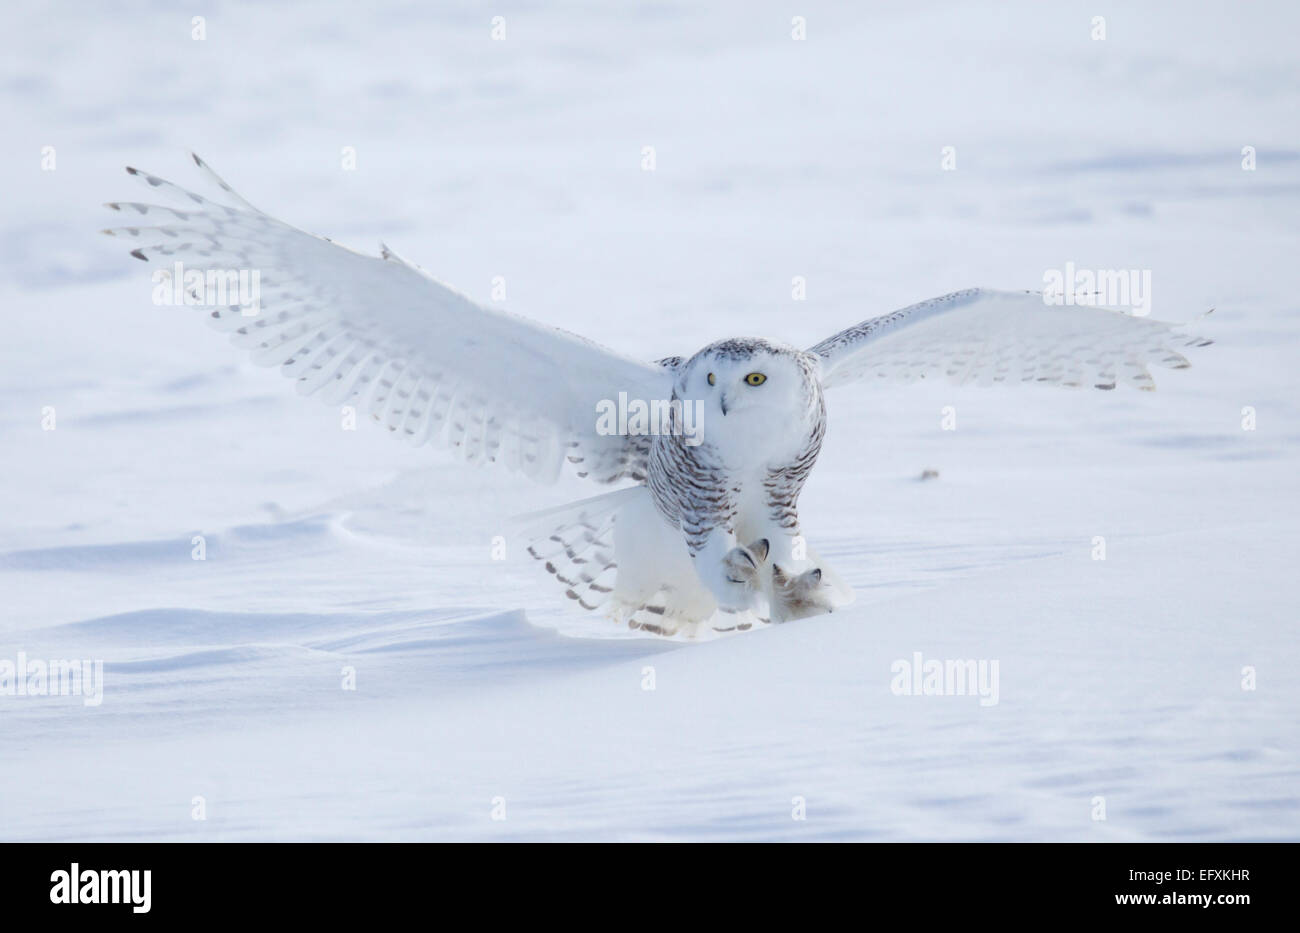 Snowy Owl Landing on Snow Stock Photo - Alamy